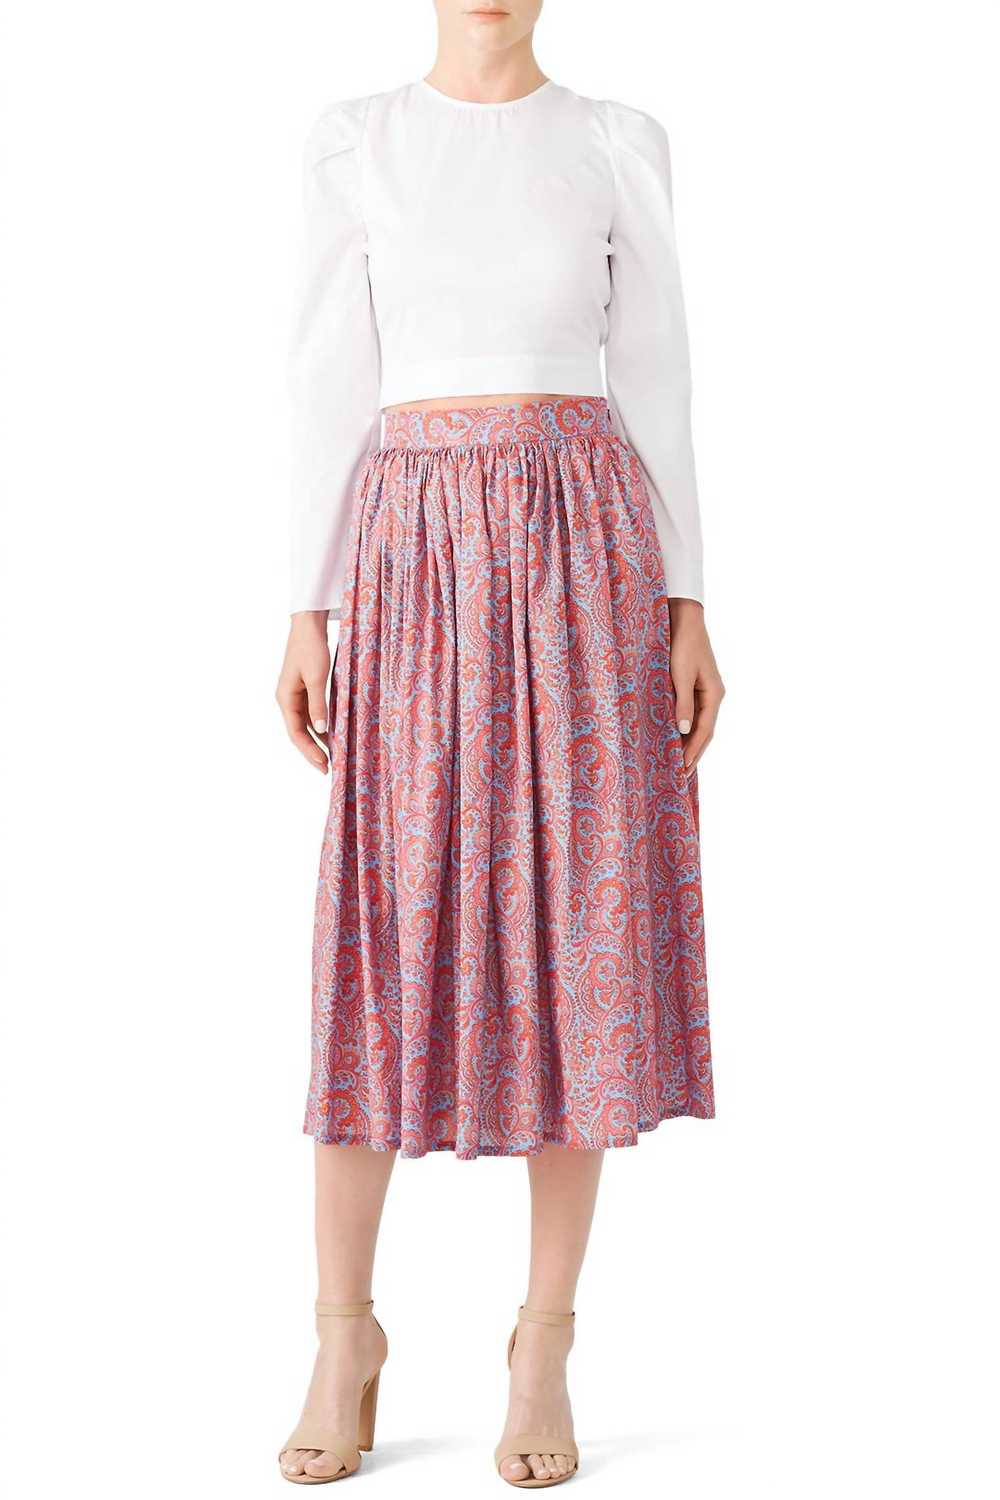 Alcoolique pre-loved mafalda midi skirt for women - image 1